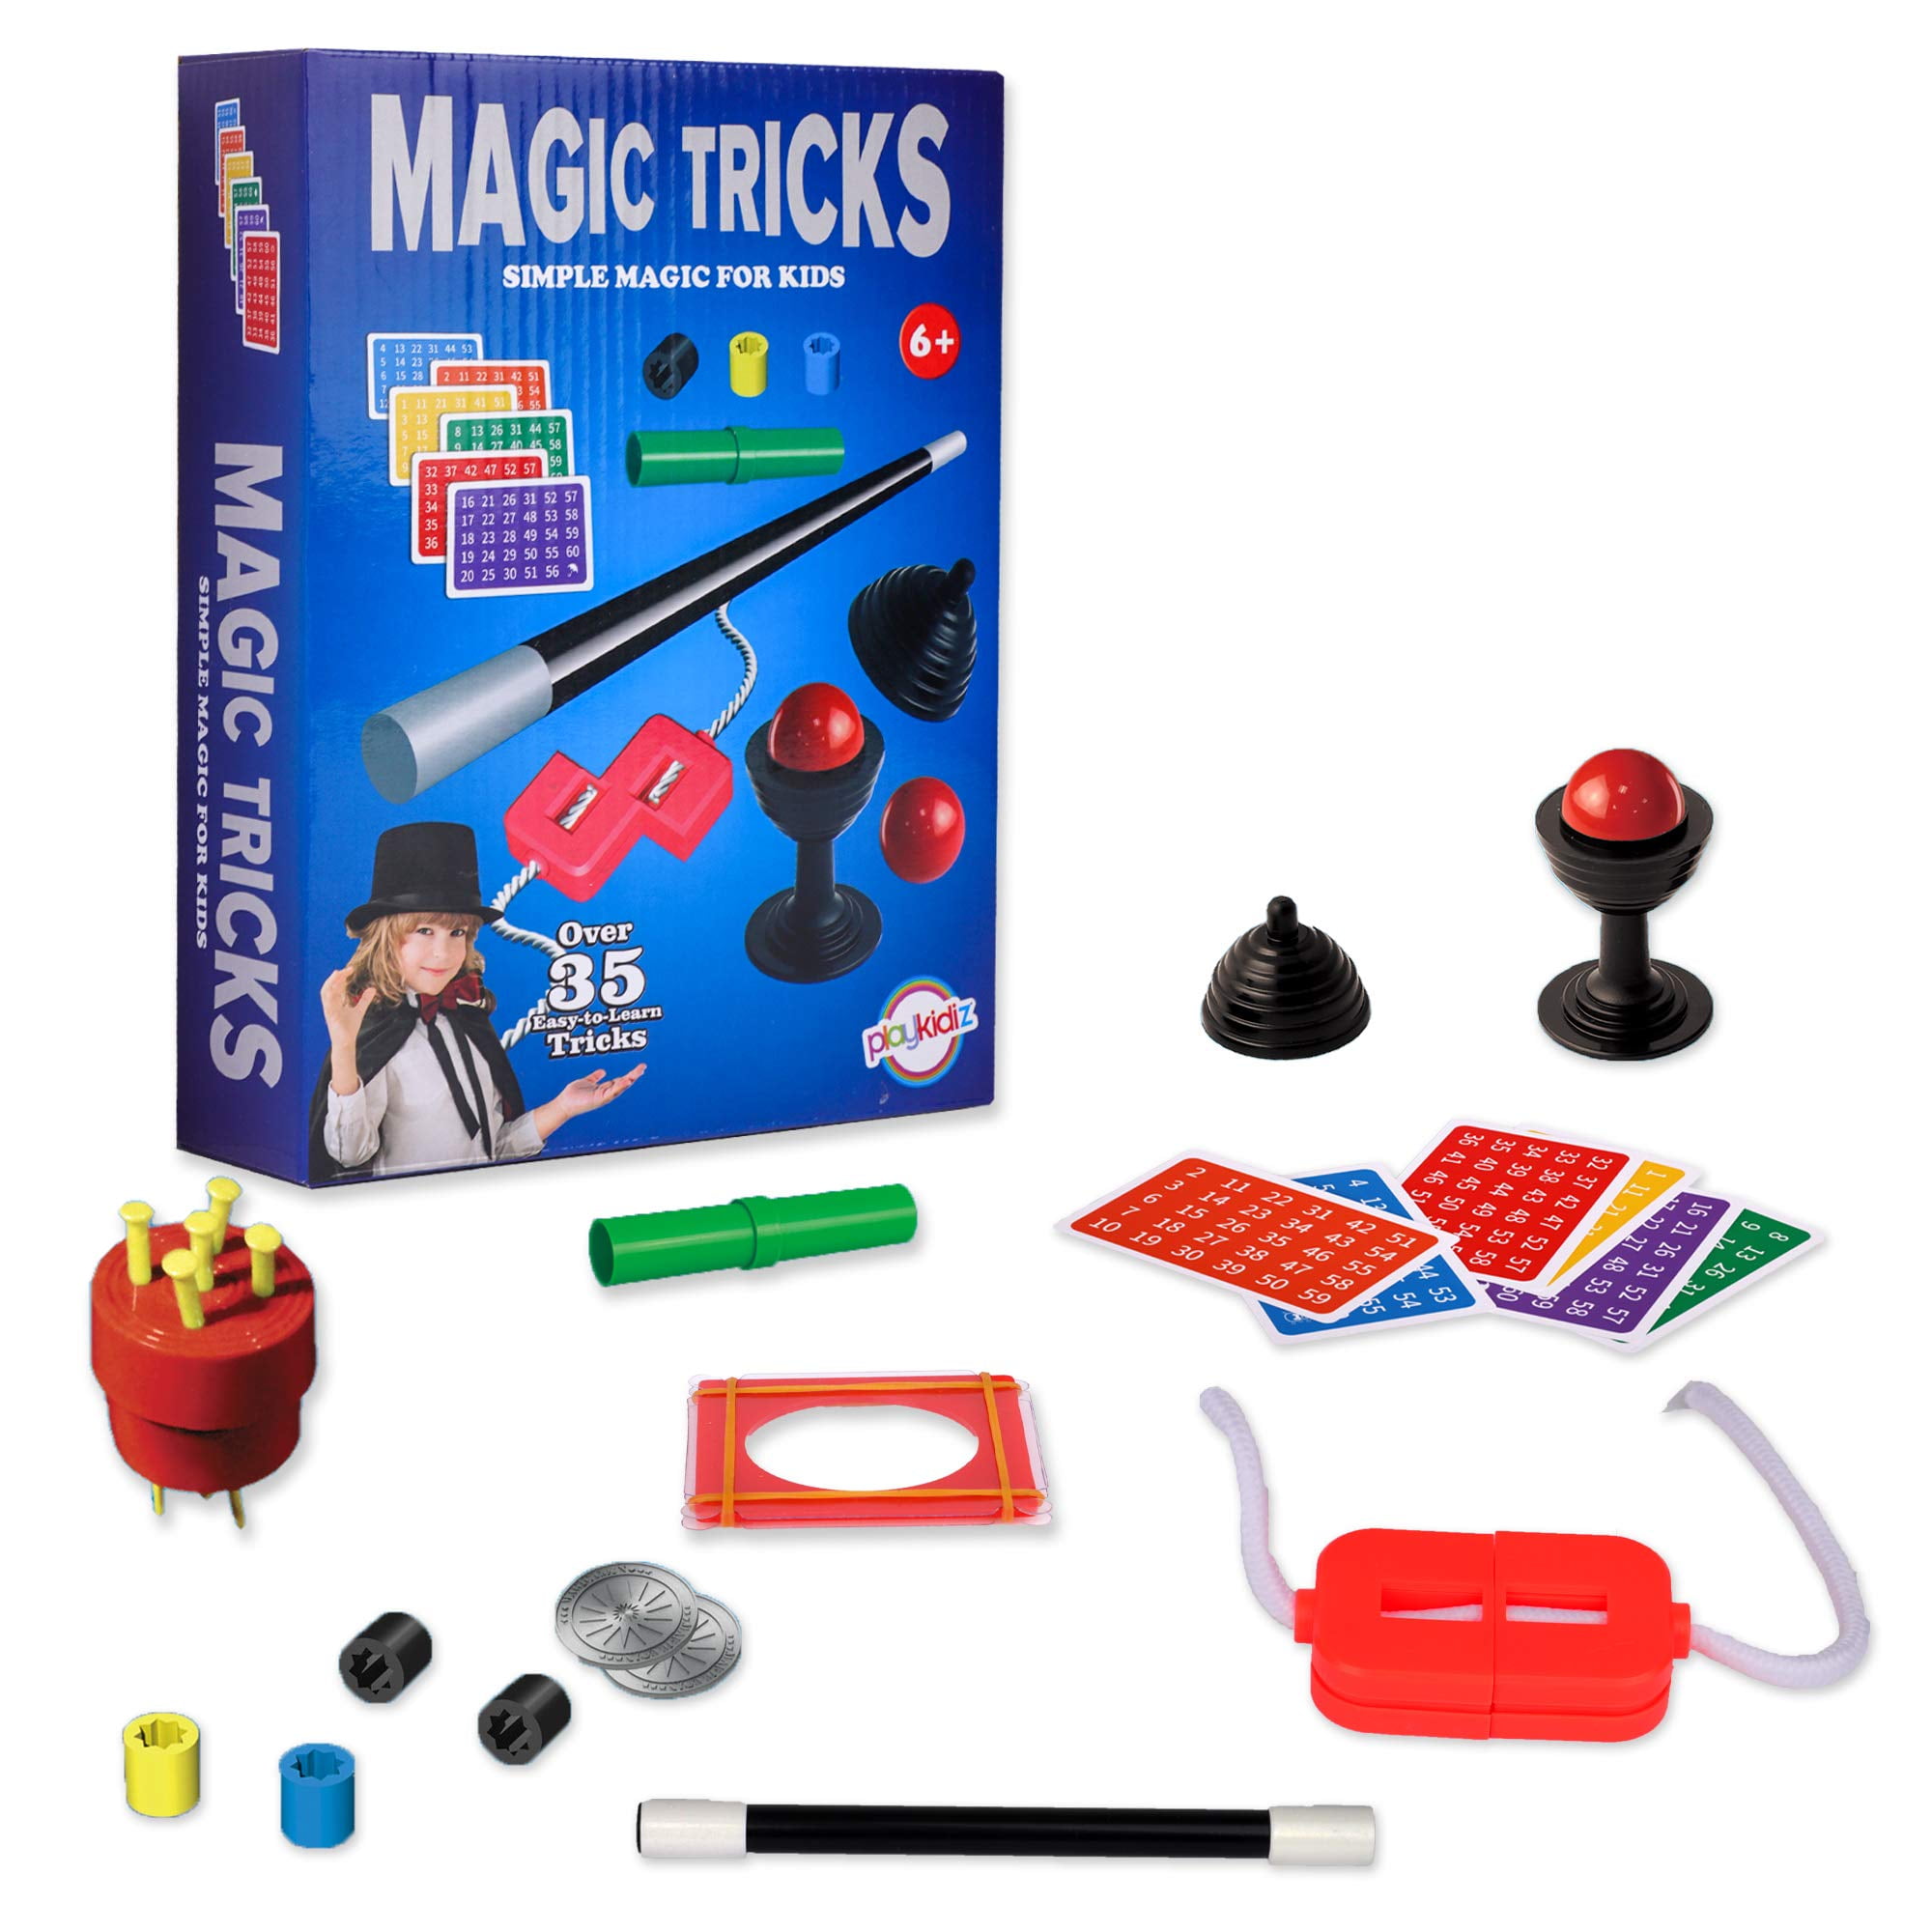 The Young Magician 50 Tricks Magic Set 